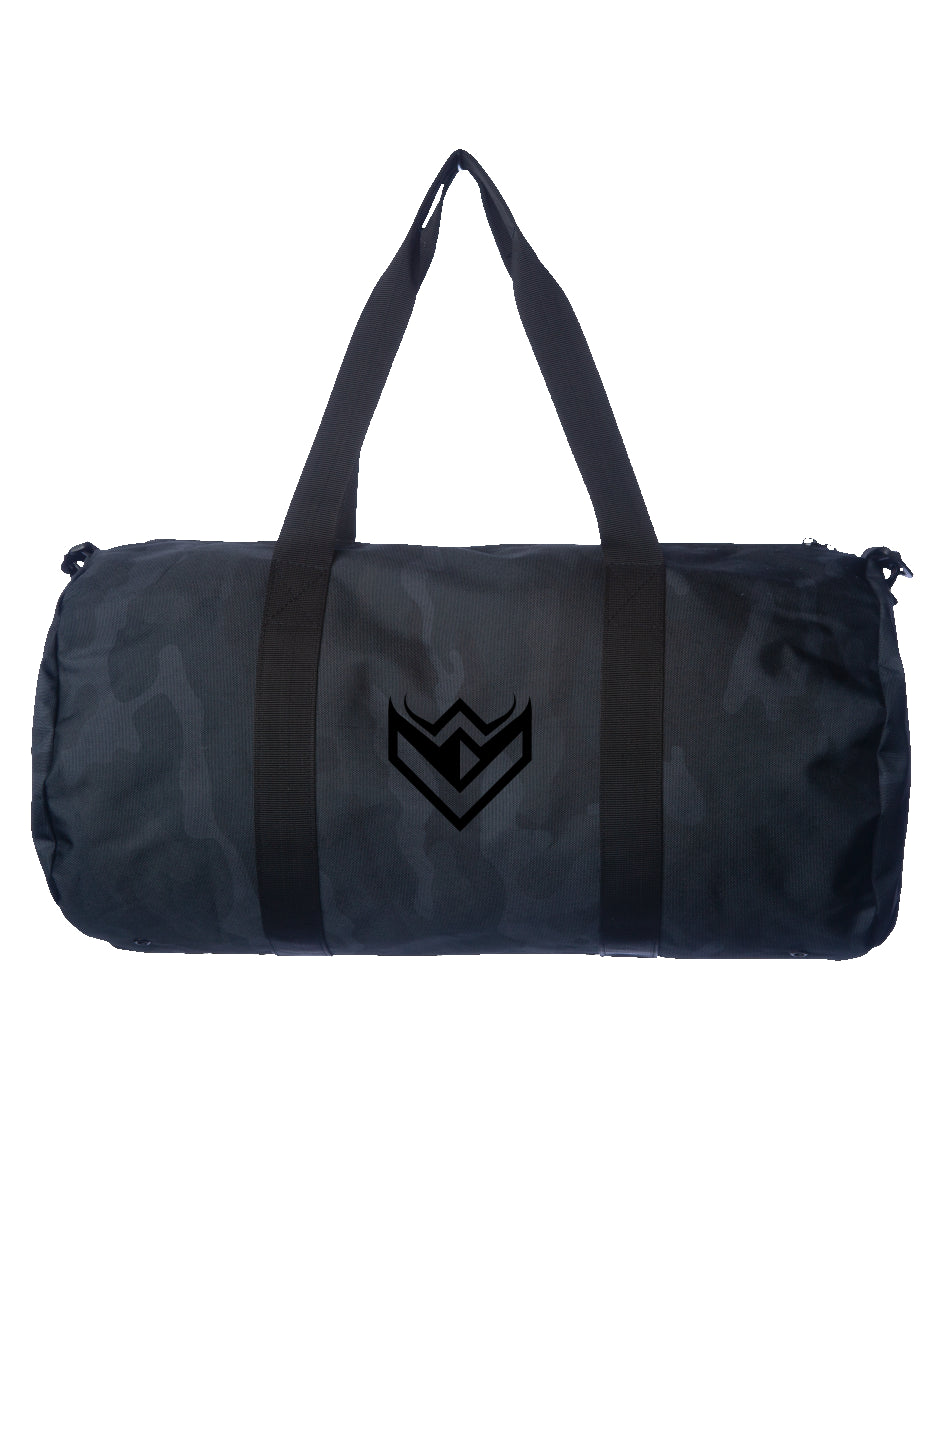 Voyager Black Camo Duffle Bag